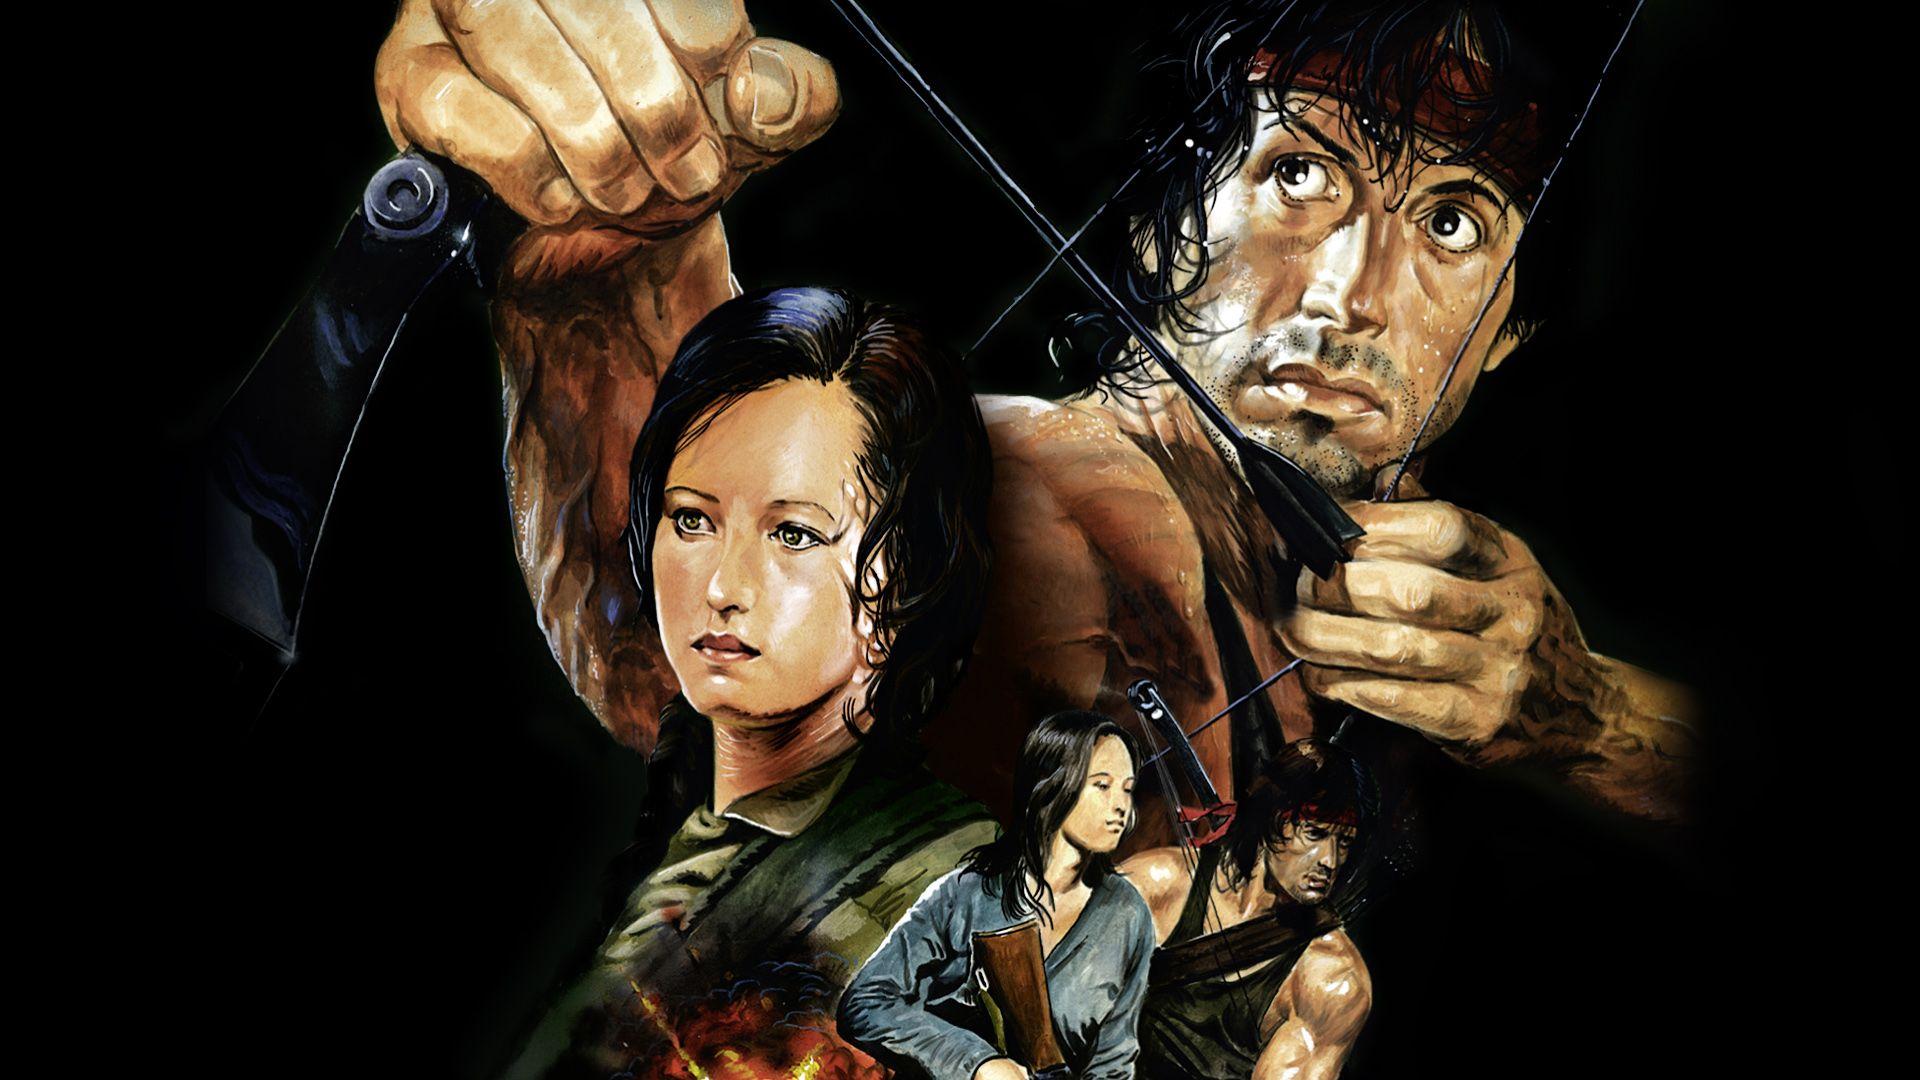 Rambo HD Wallpaper Free Download. Peliculas en castellano